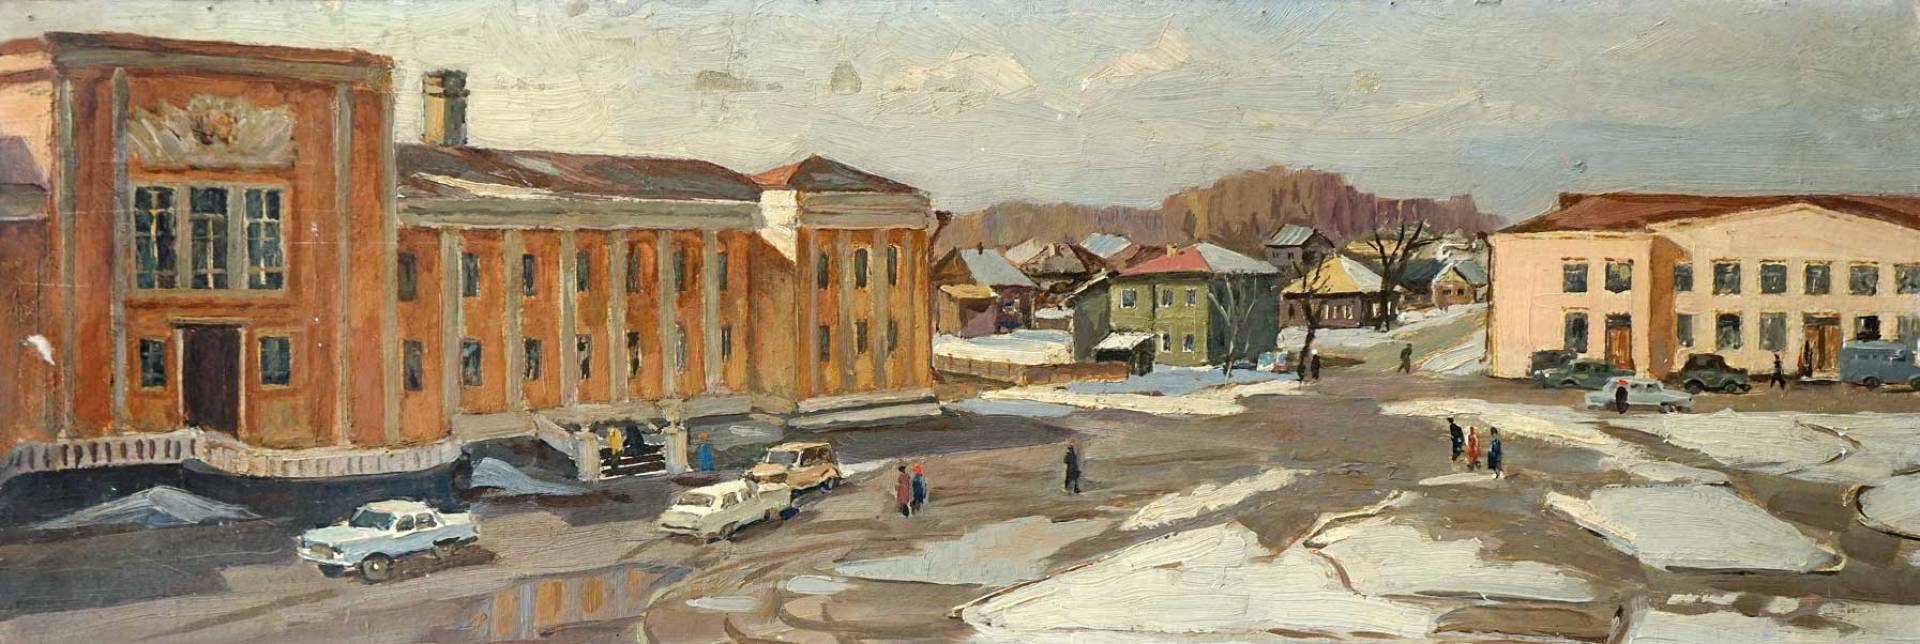 Shushenskoye. New Square - 1, Boris Glushkov, Buy the painting Oil